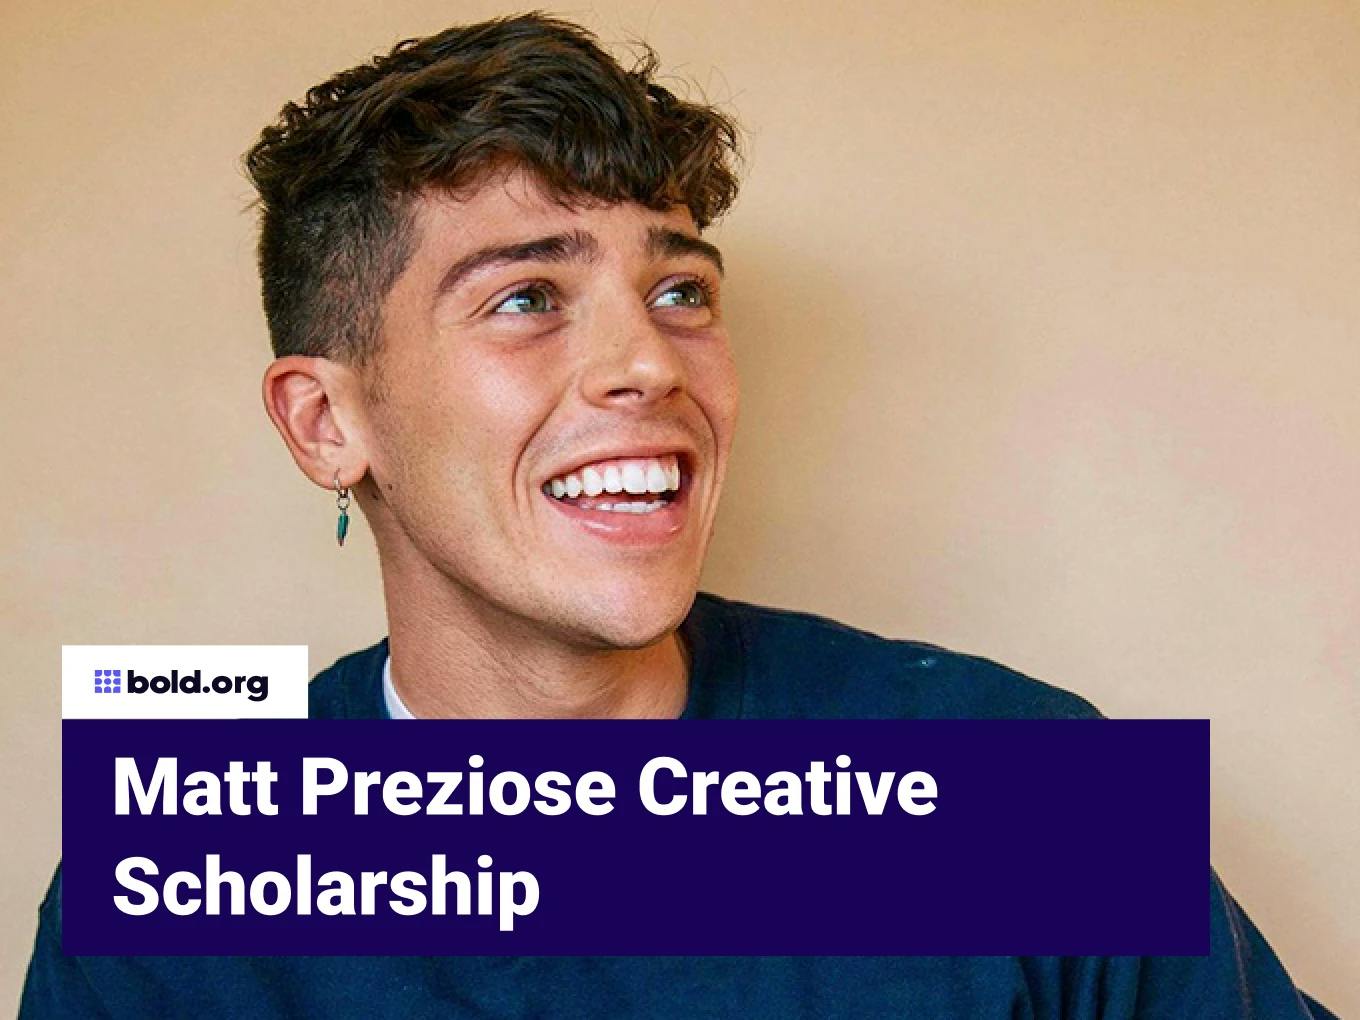 Matt Preziose Creative Scholarship